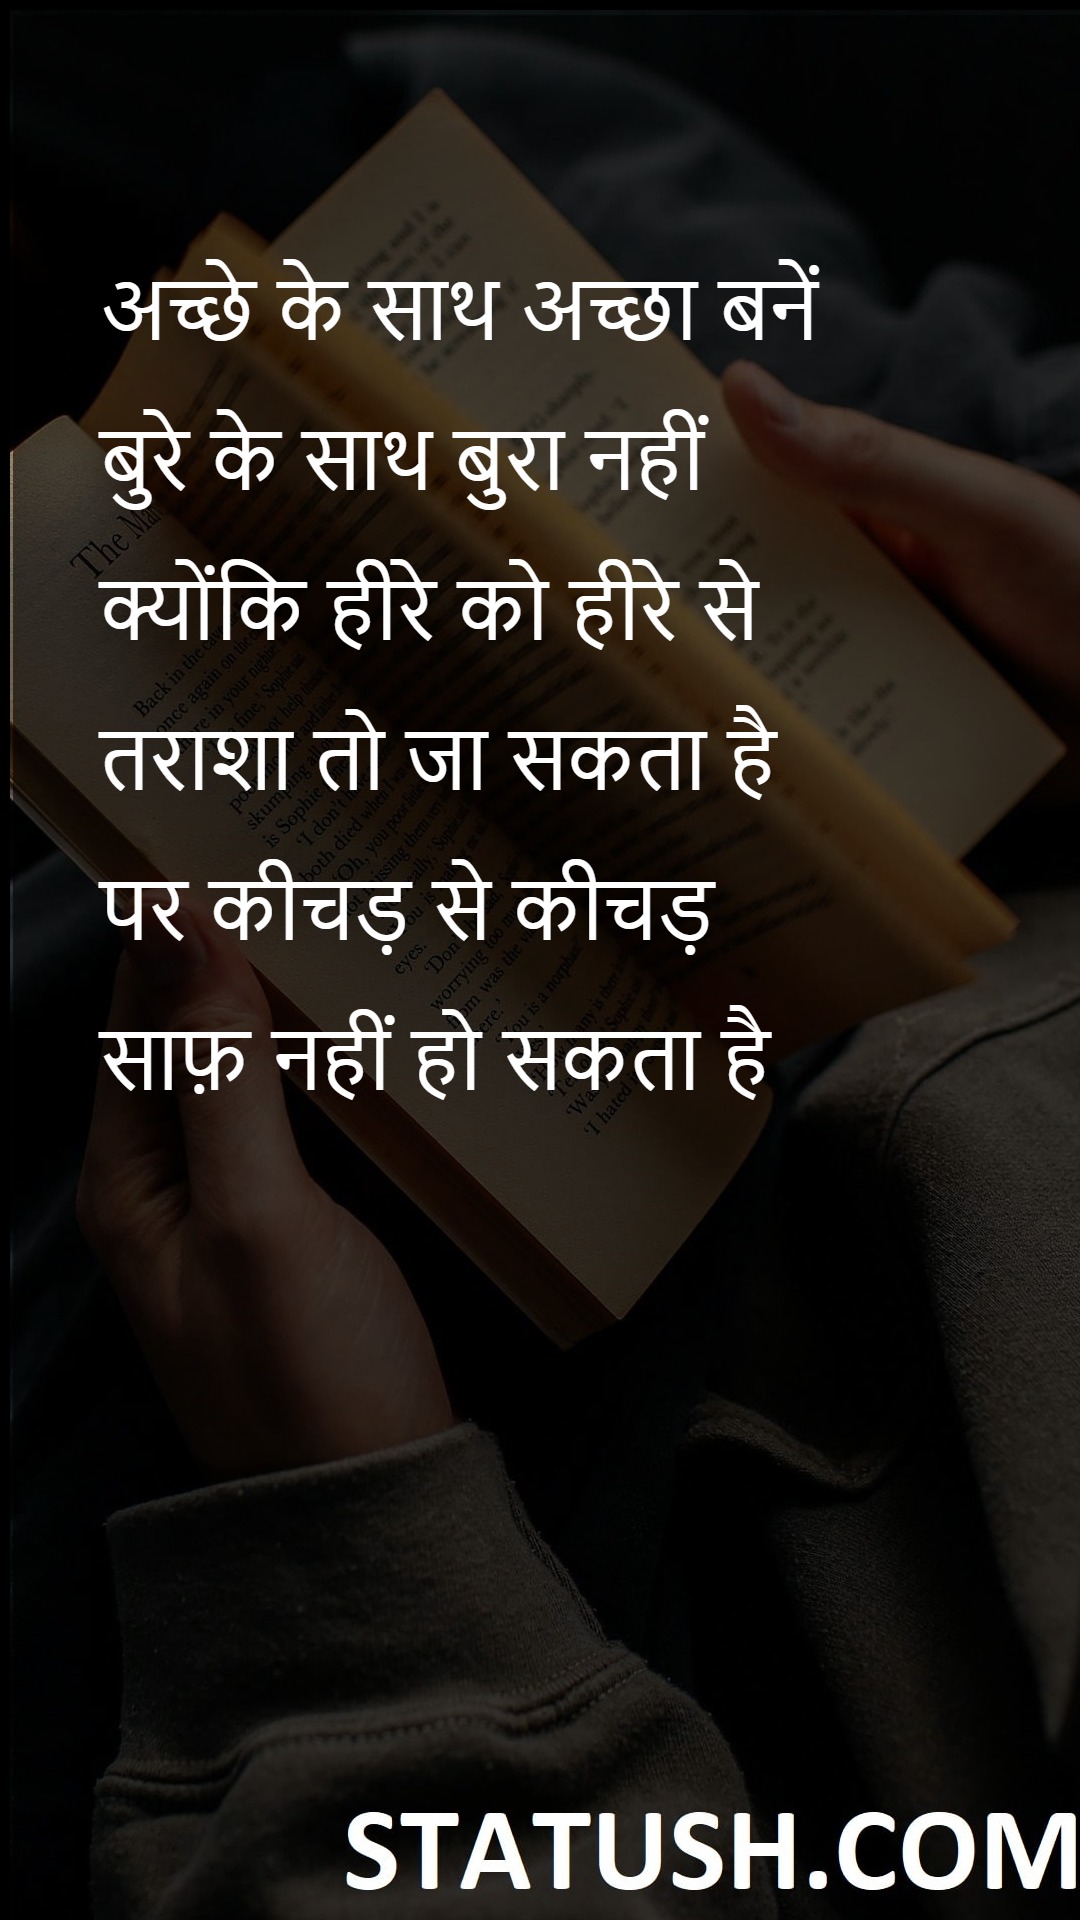 Be good with good, not bad with bad Hindi Quotes at statush.com